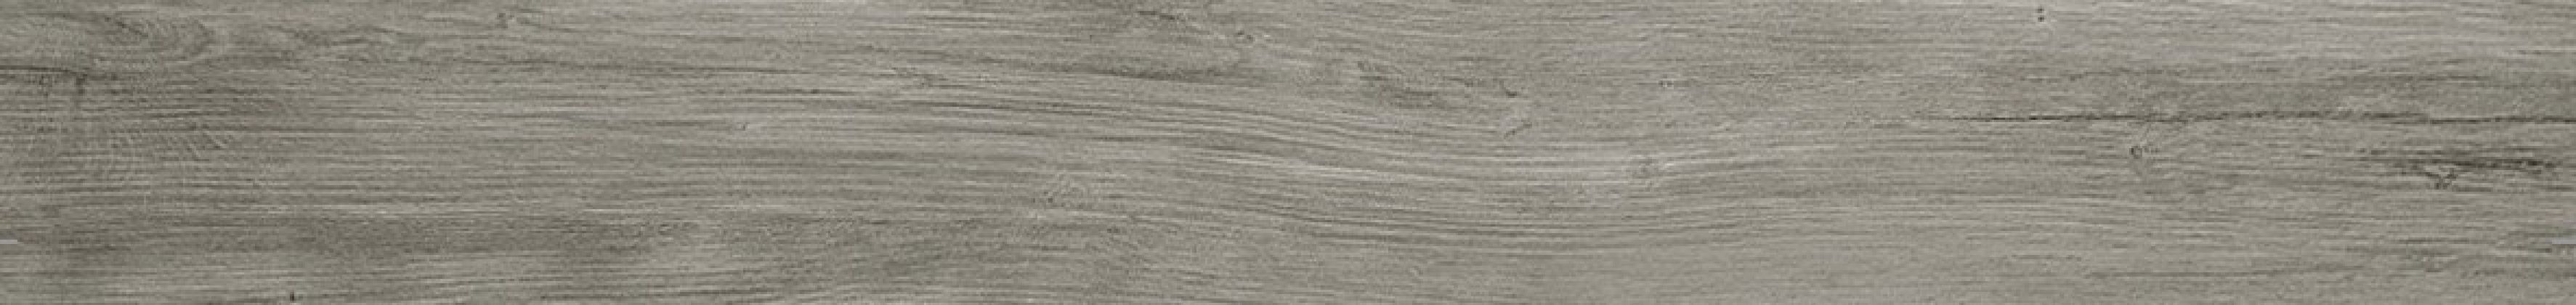 Floor Tiles GVT Marine Wood Verde 20x120 1207